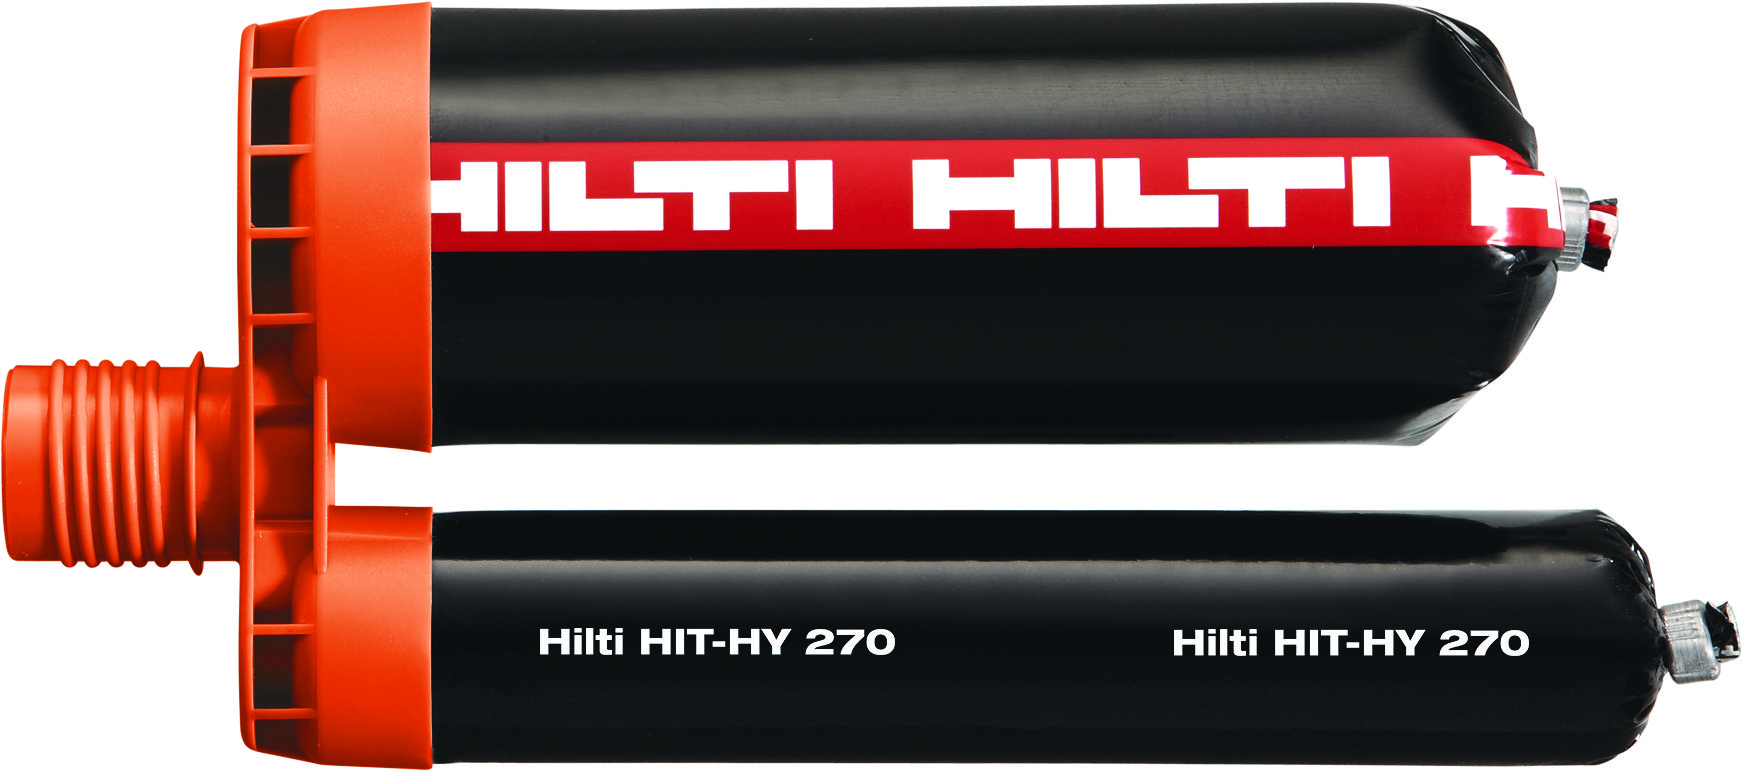 Hilti HIT-HY 270